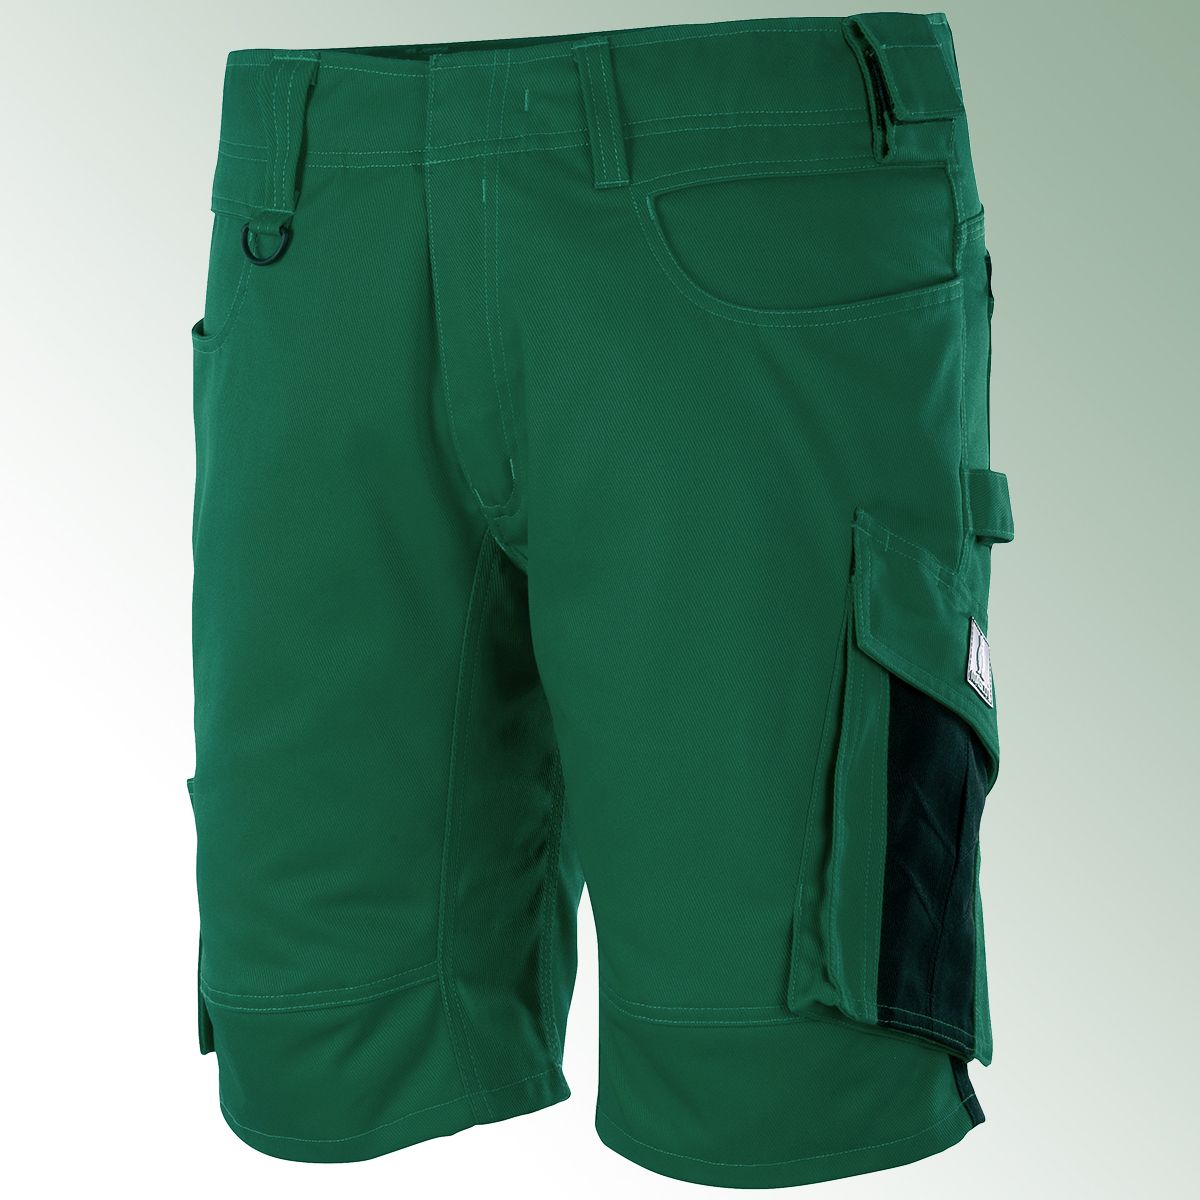 Work Shorts Stuttgart Size 60 Green / Black